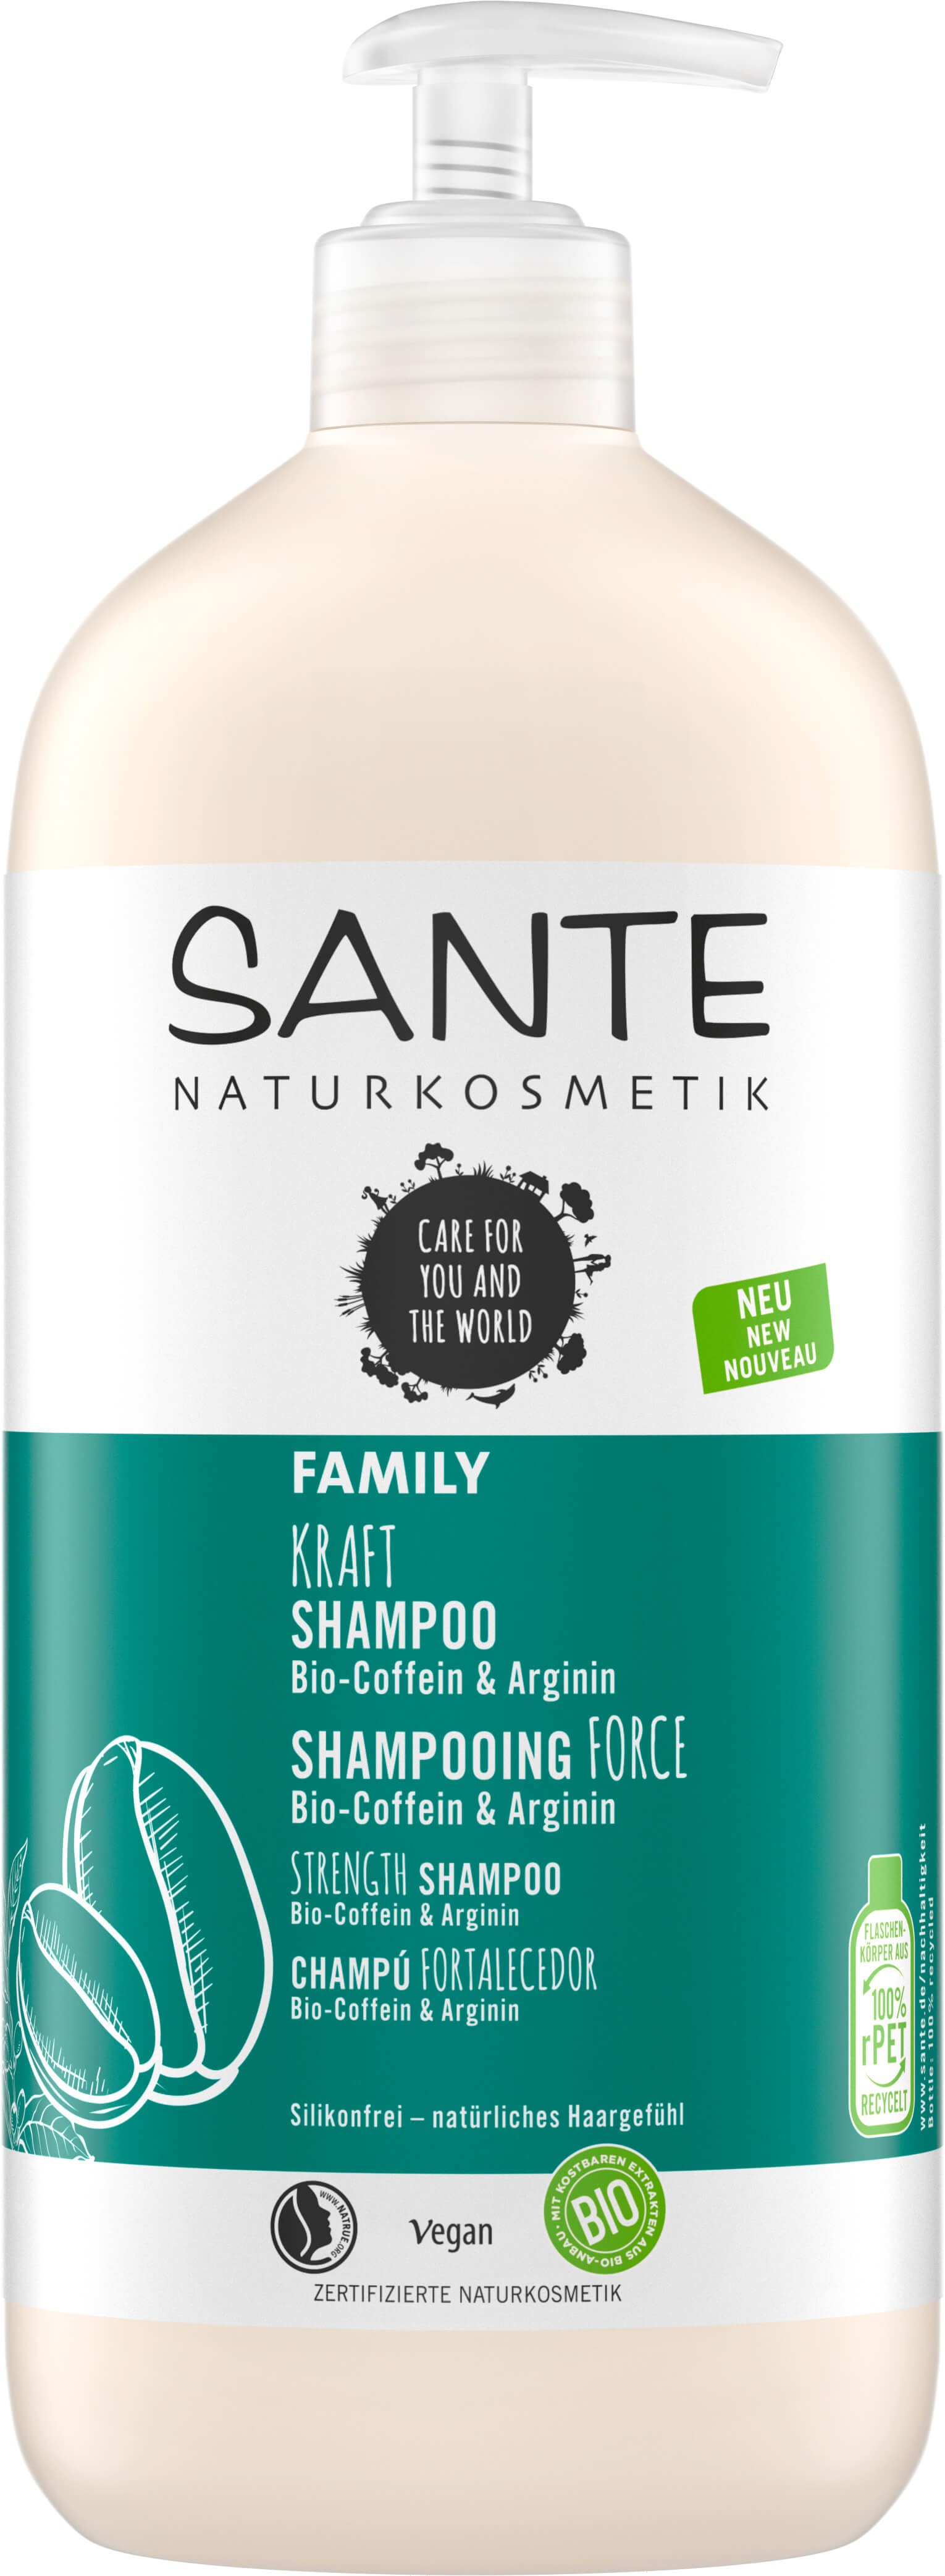 Kraft Shampoo Bio-Coffein & Arginin SANTE Naturkosmetik 